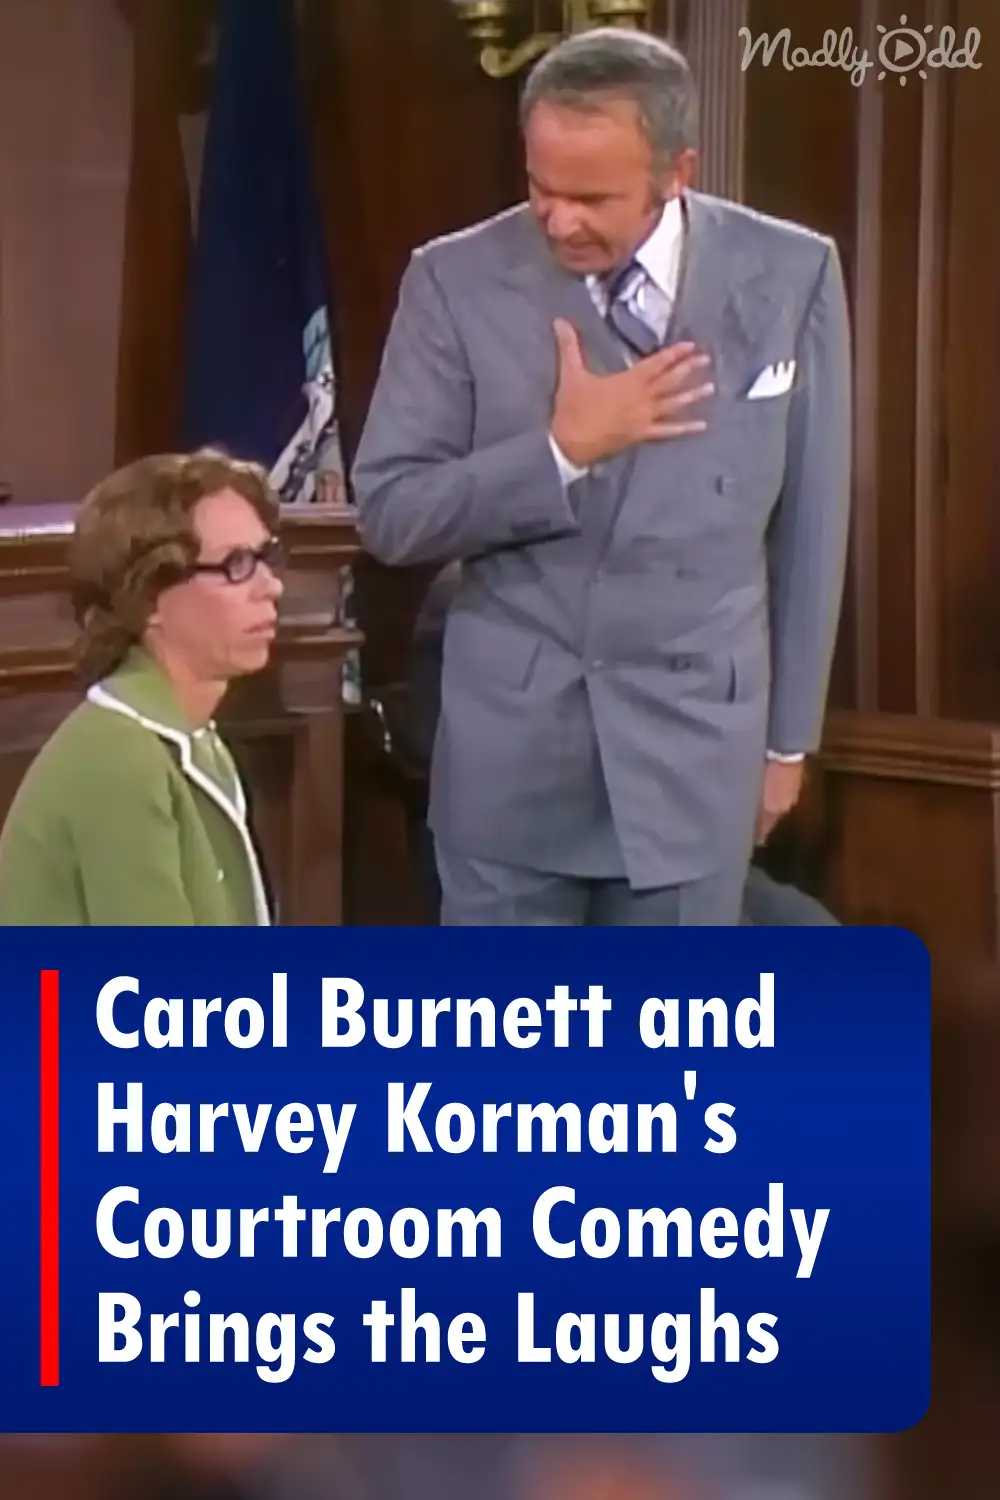 Carol Burnett and Harvey Korman's Courtroom Comedy Brings the Laughs